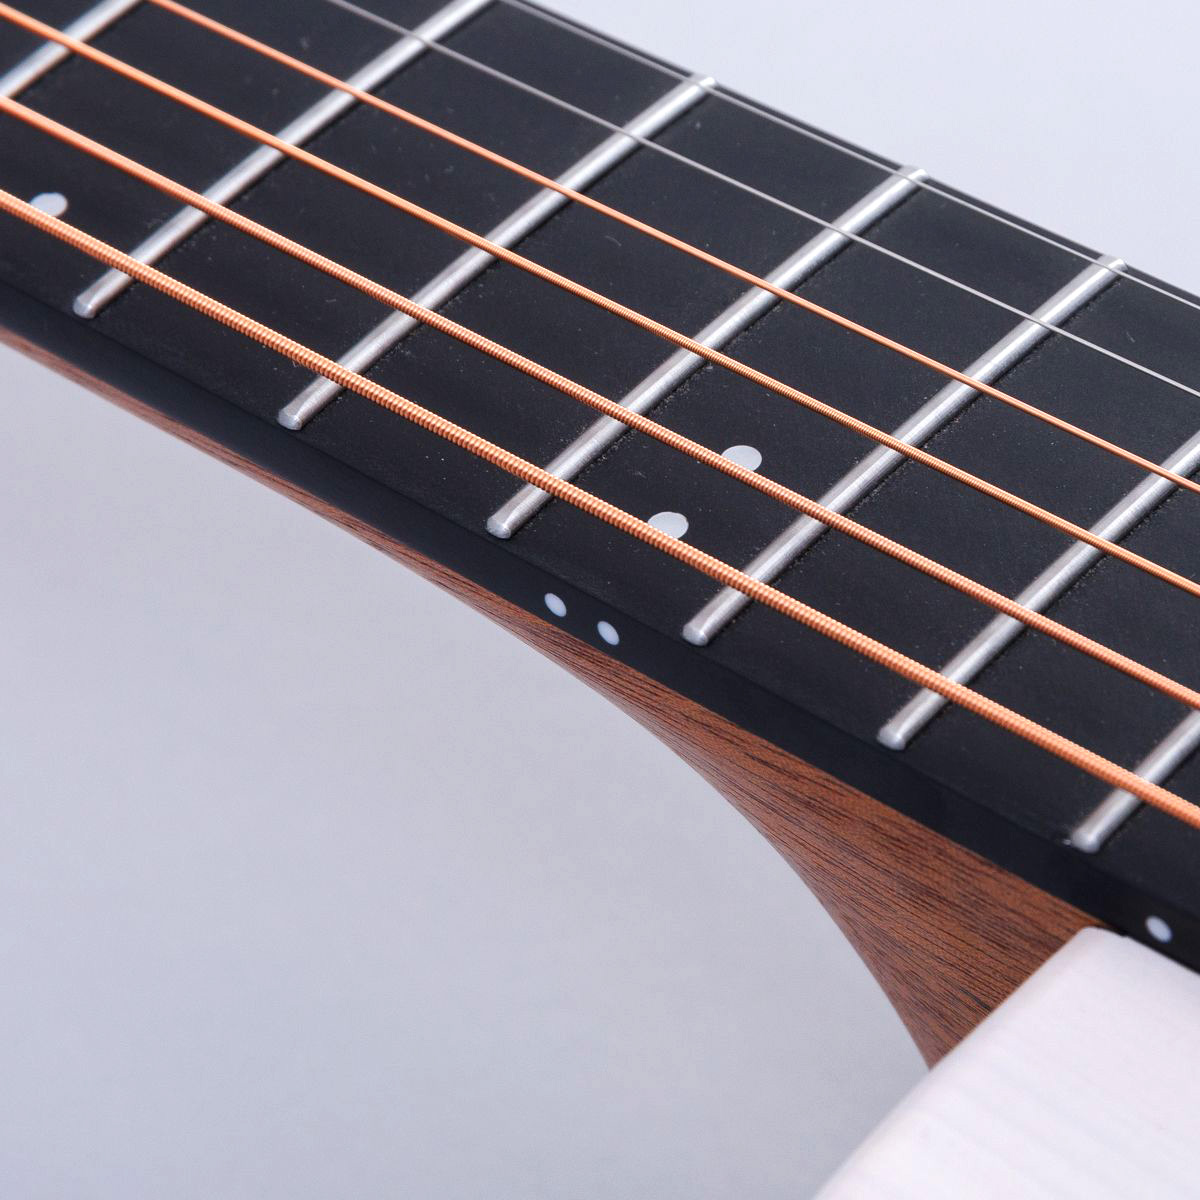 J-300S アコースティックギター 教本付きセレクト12点セット 初心者セットトップ単板 簡単弦高調整 細いネック 関連画像